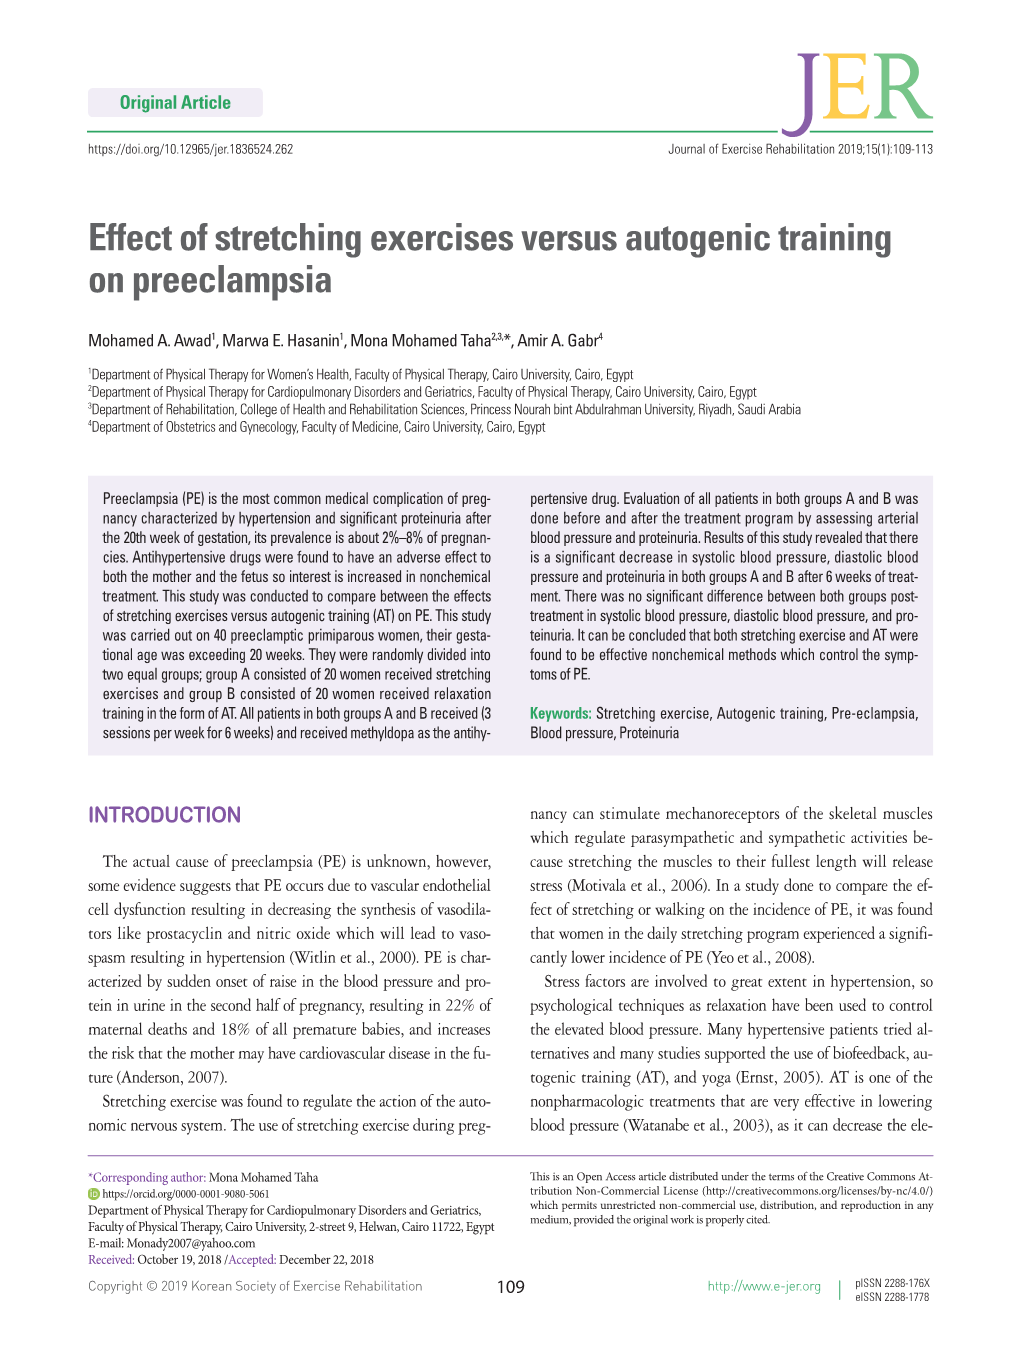 Effect of Stretching Exercises Versus Autogenic Training on Preeclampsia